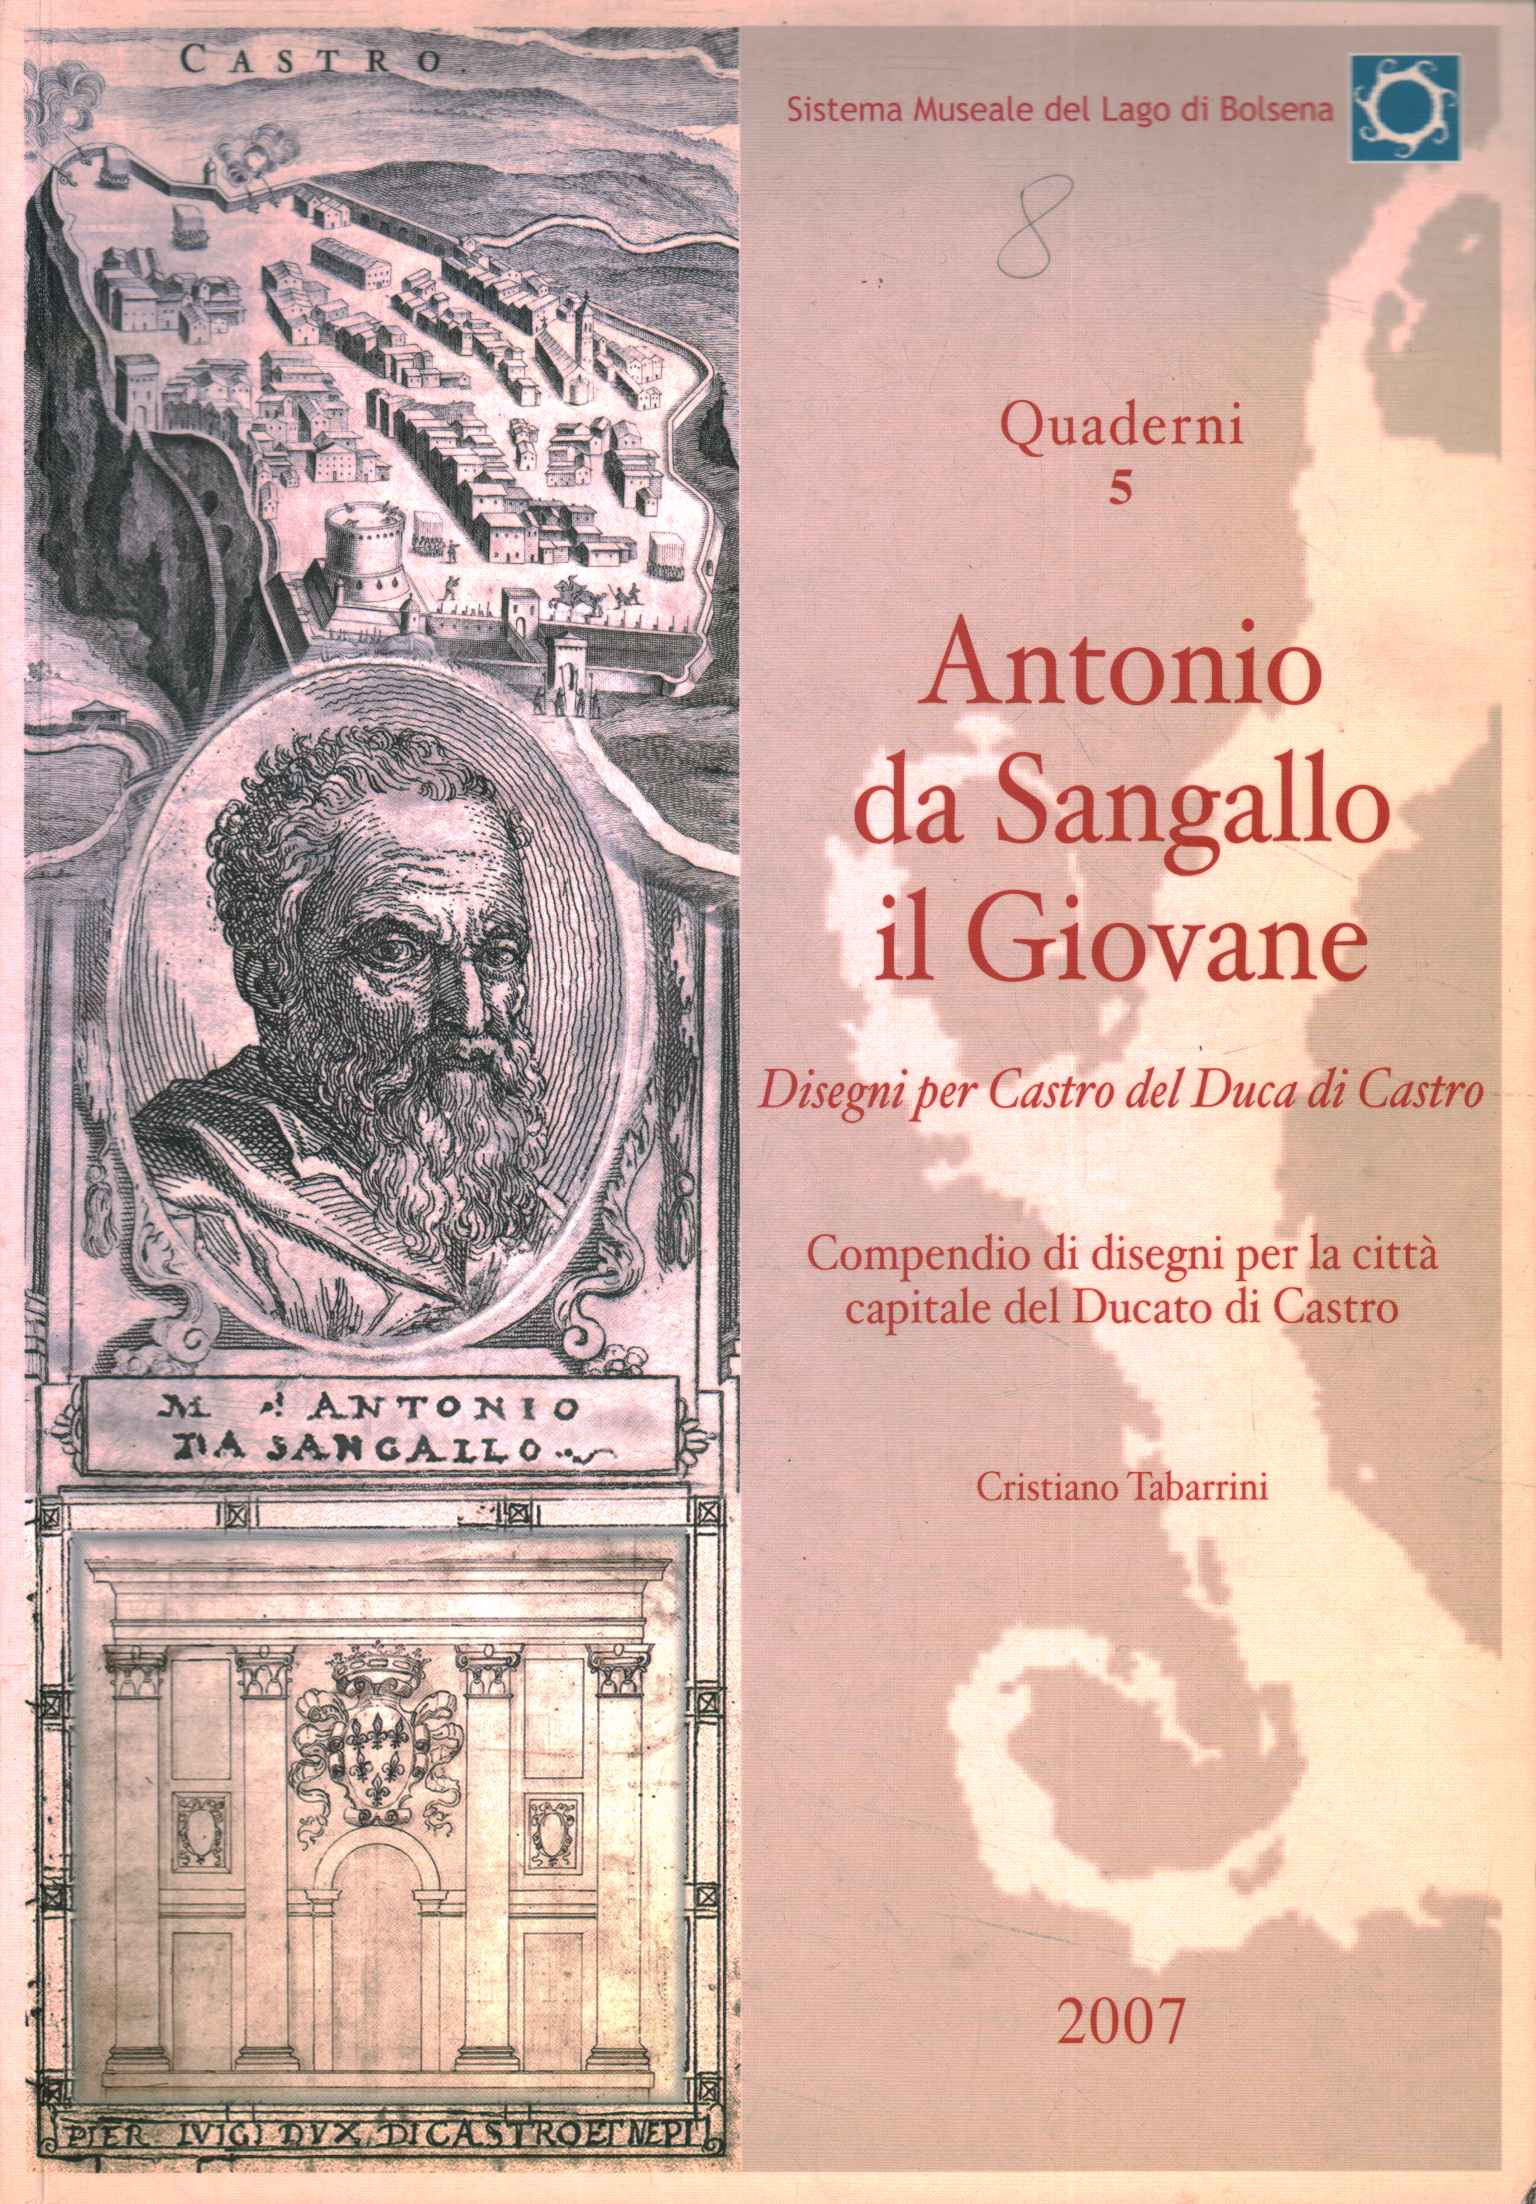 Notebooks 5. Antonio da Sangallo on Thursday